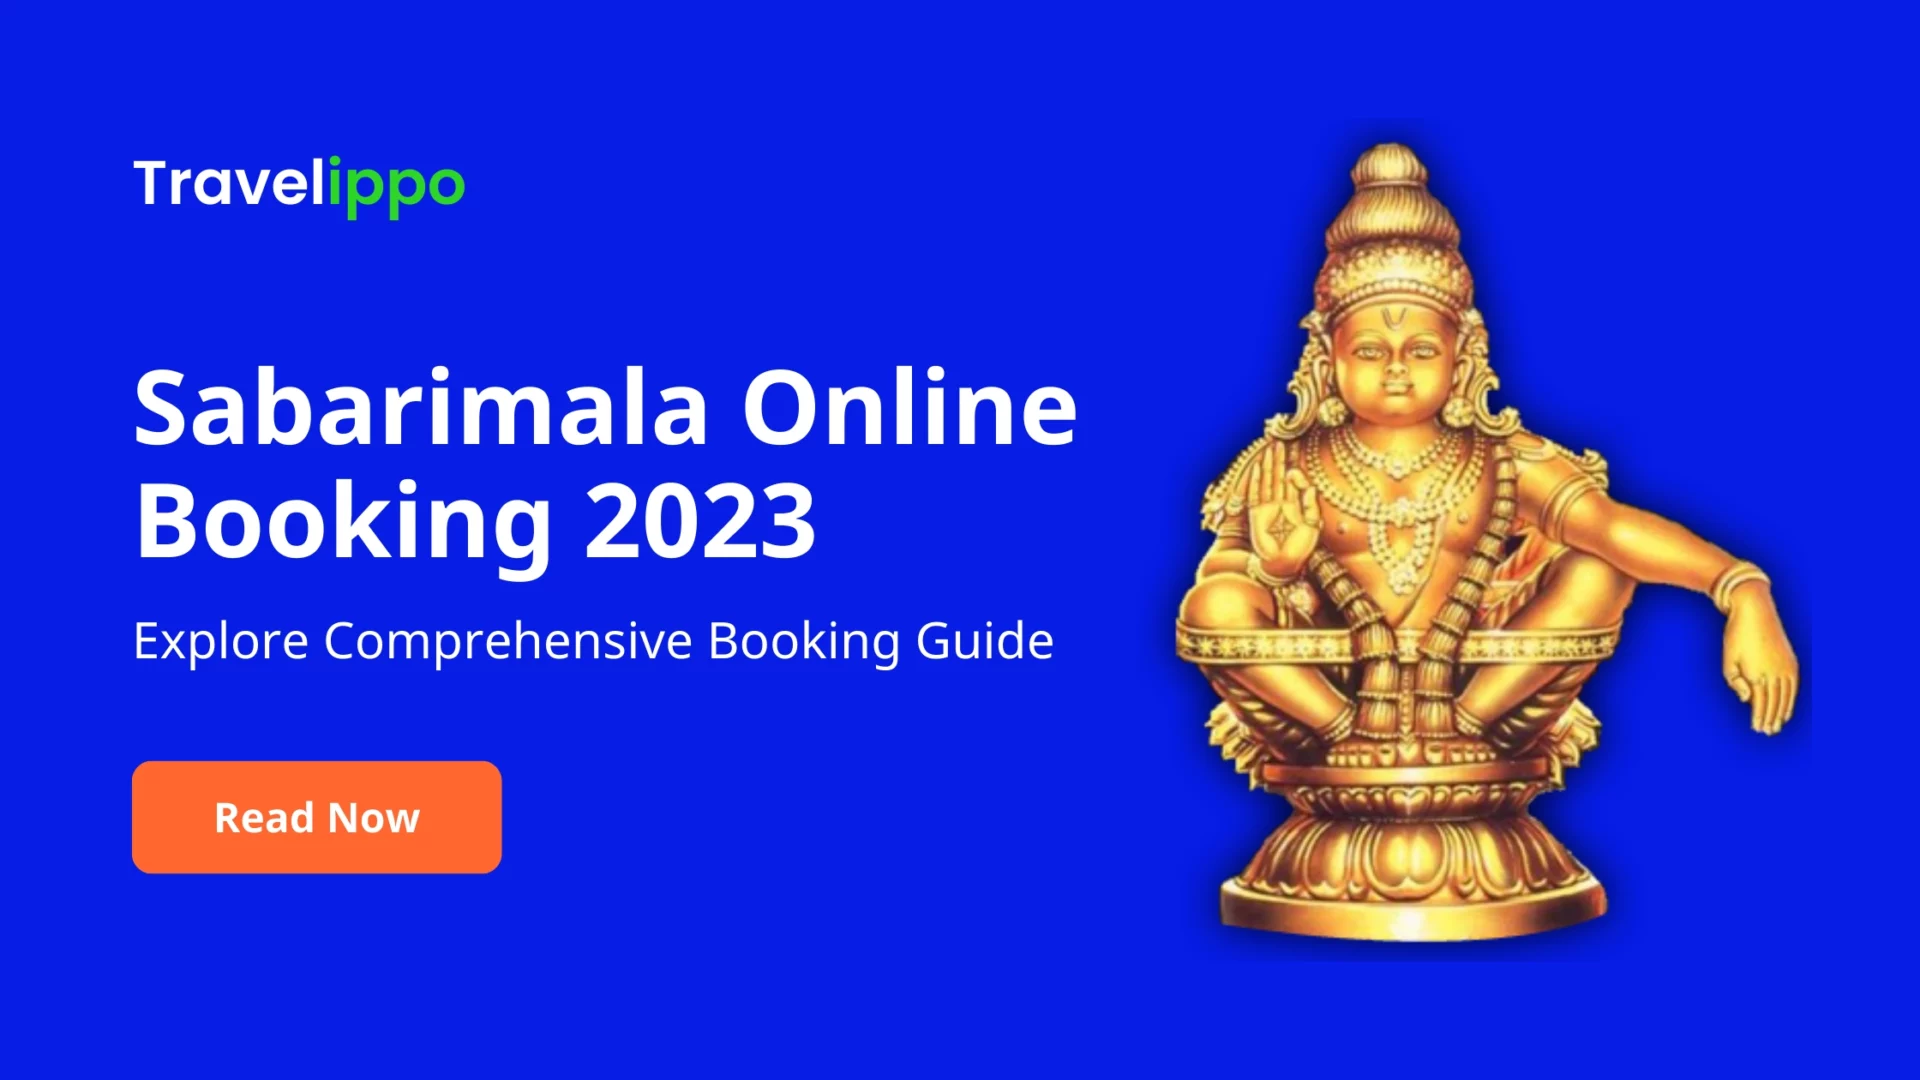 Sabarimala Online Booking Guide 2023